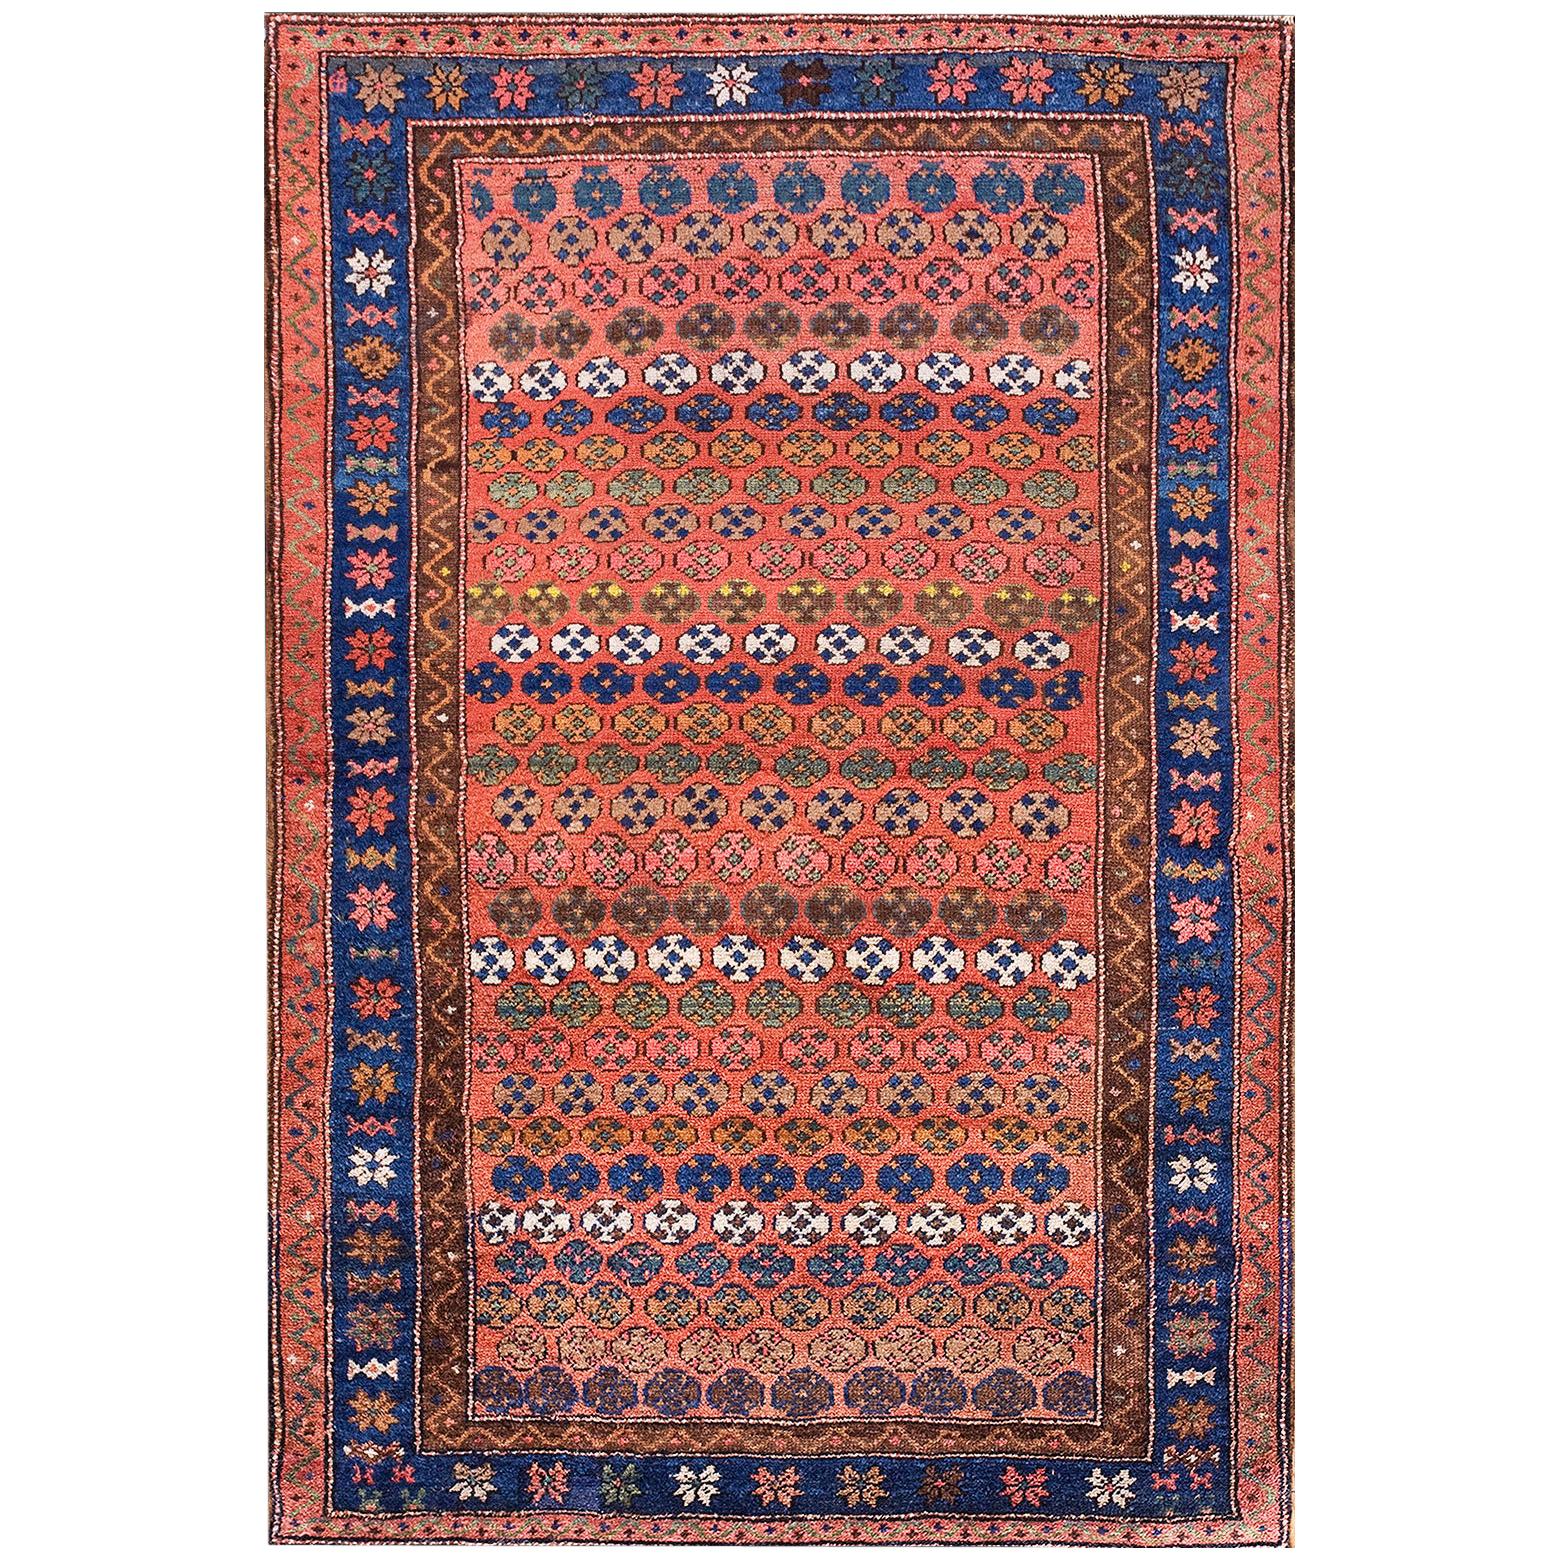 19th Century N.W. Persian Carpet ( 3'10" x 5'10" - 117 x 178 )